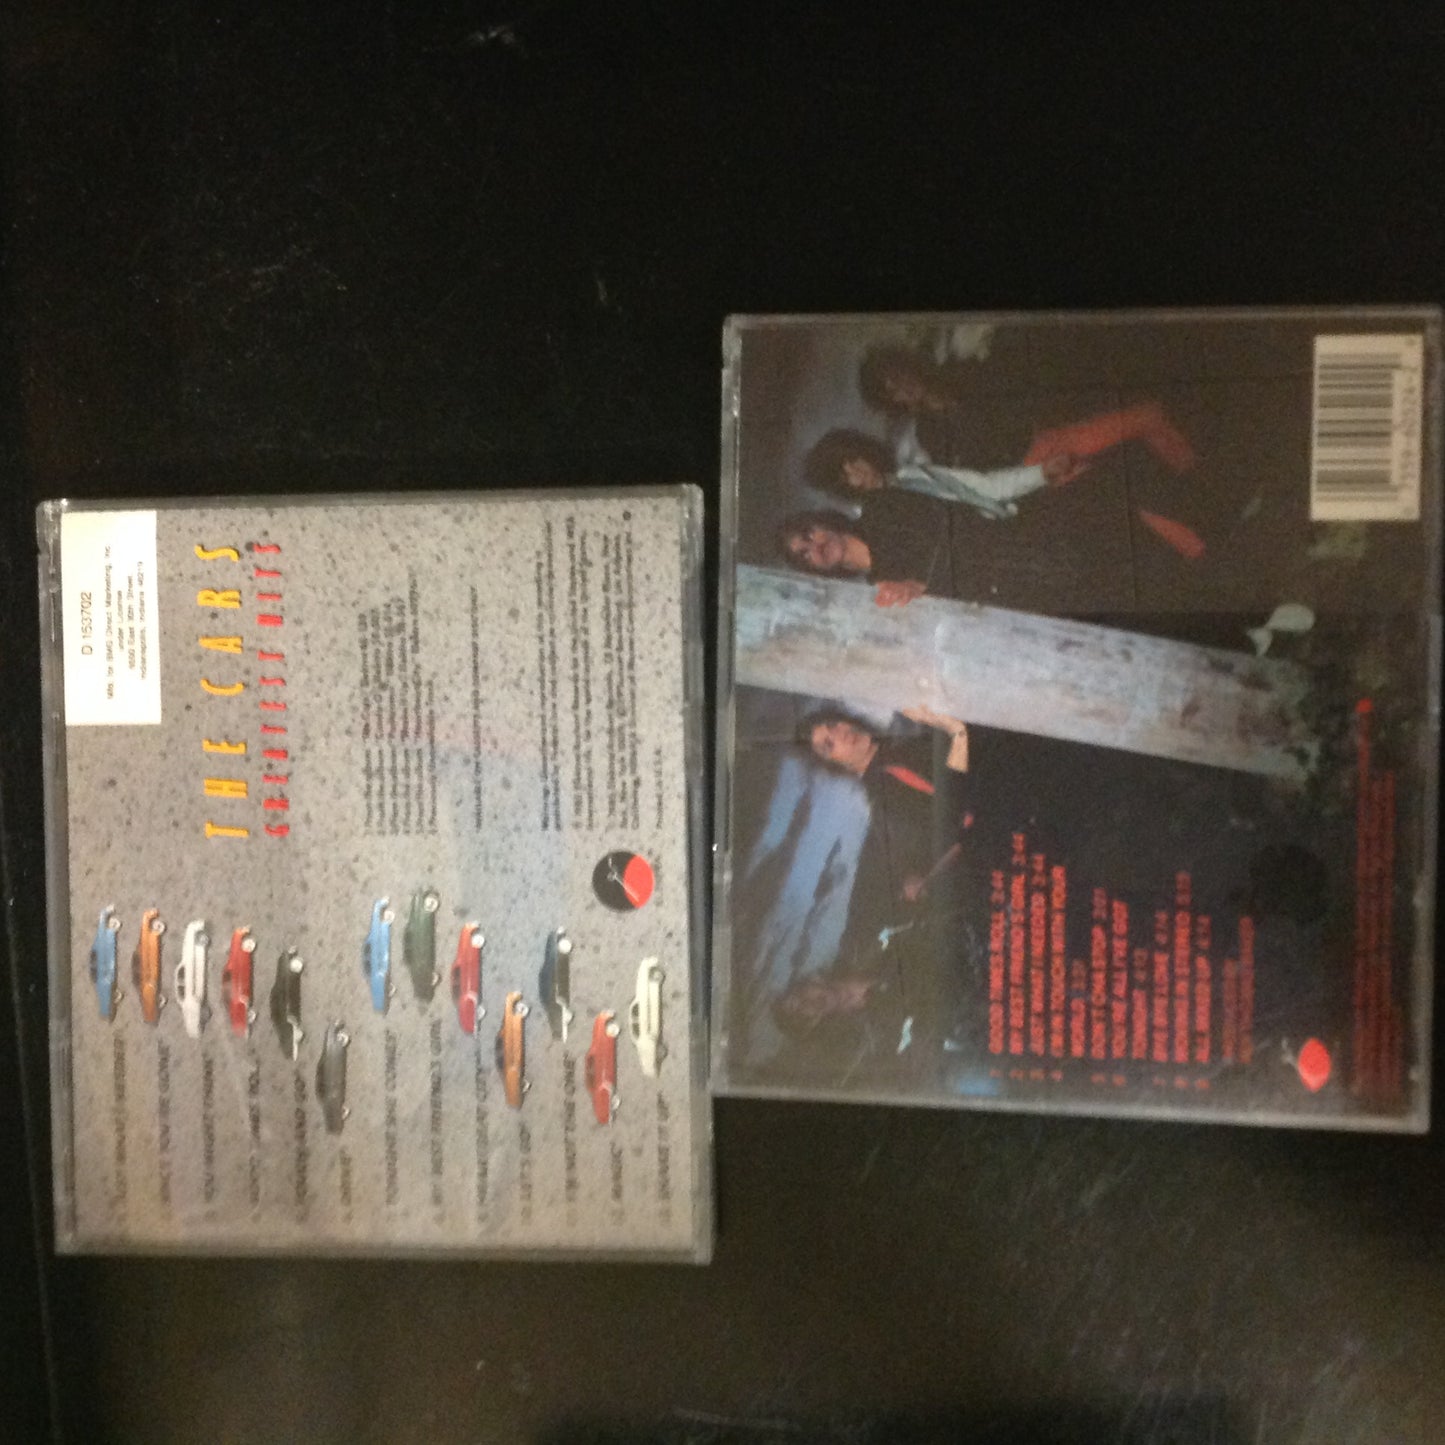 Pair CD's 2 The Cars, The Cars Greatest Hits 960464-2 135-2 Elektra